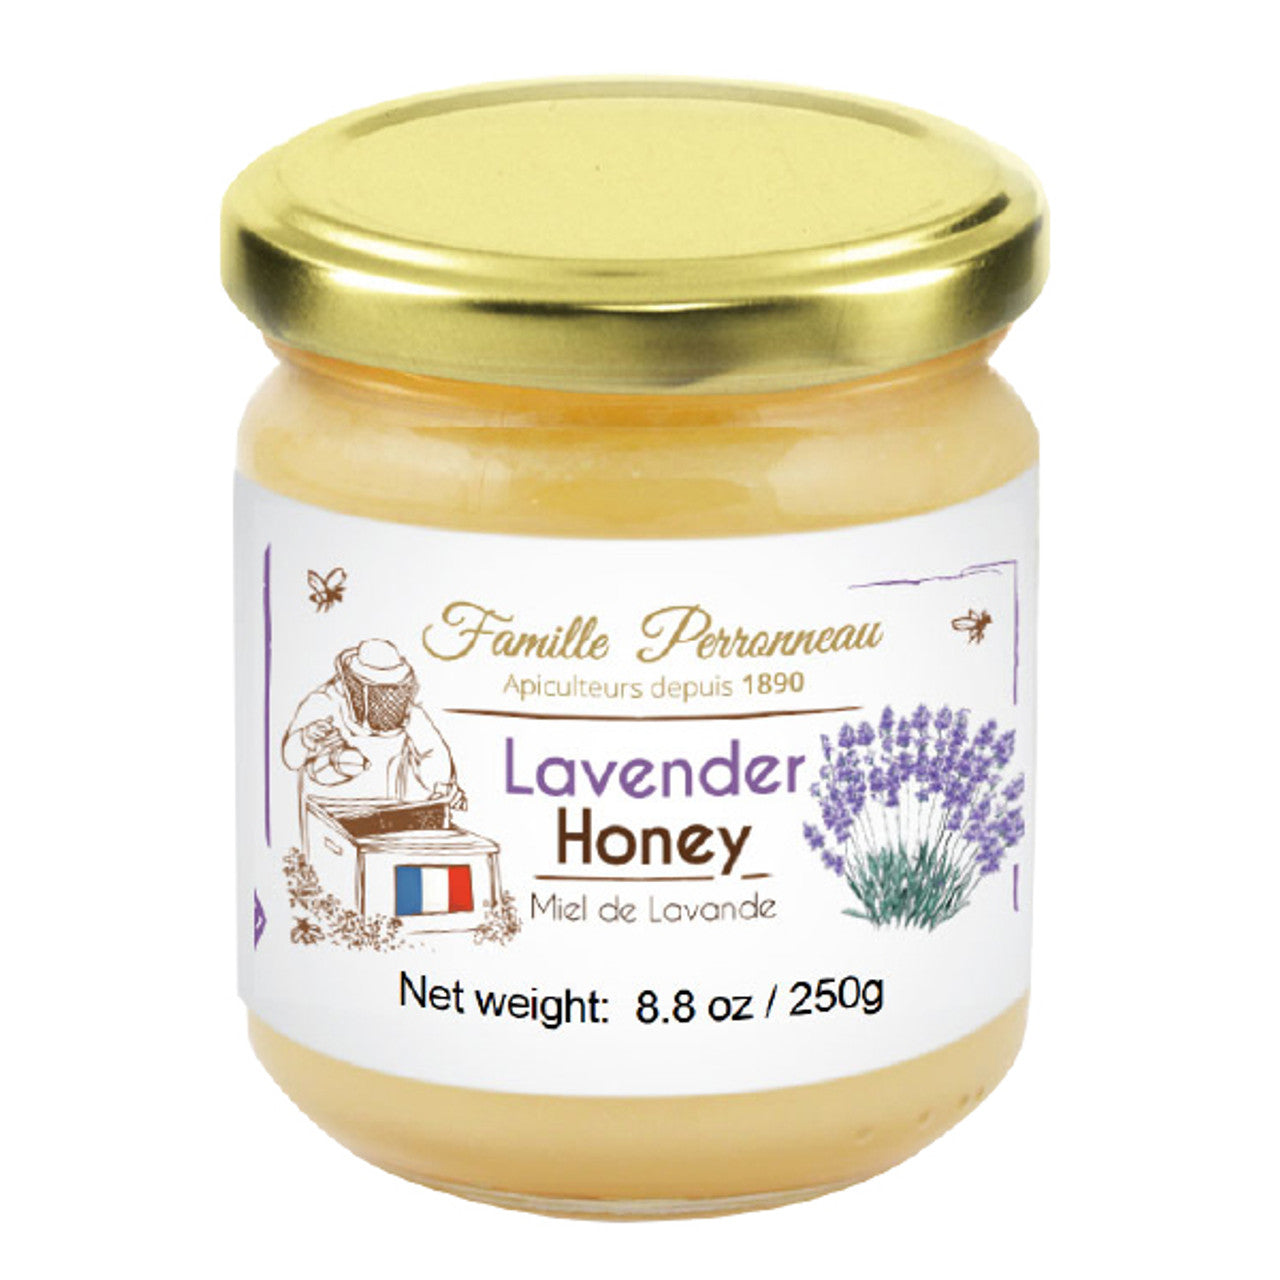 Famille Perroneau Lavender Honey